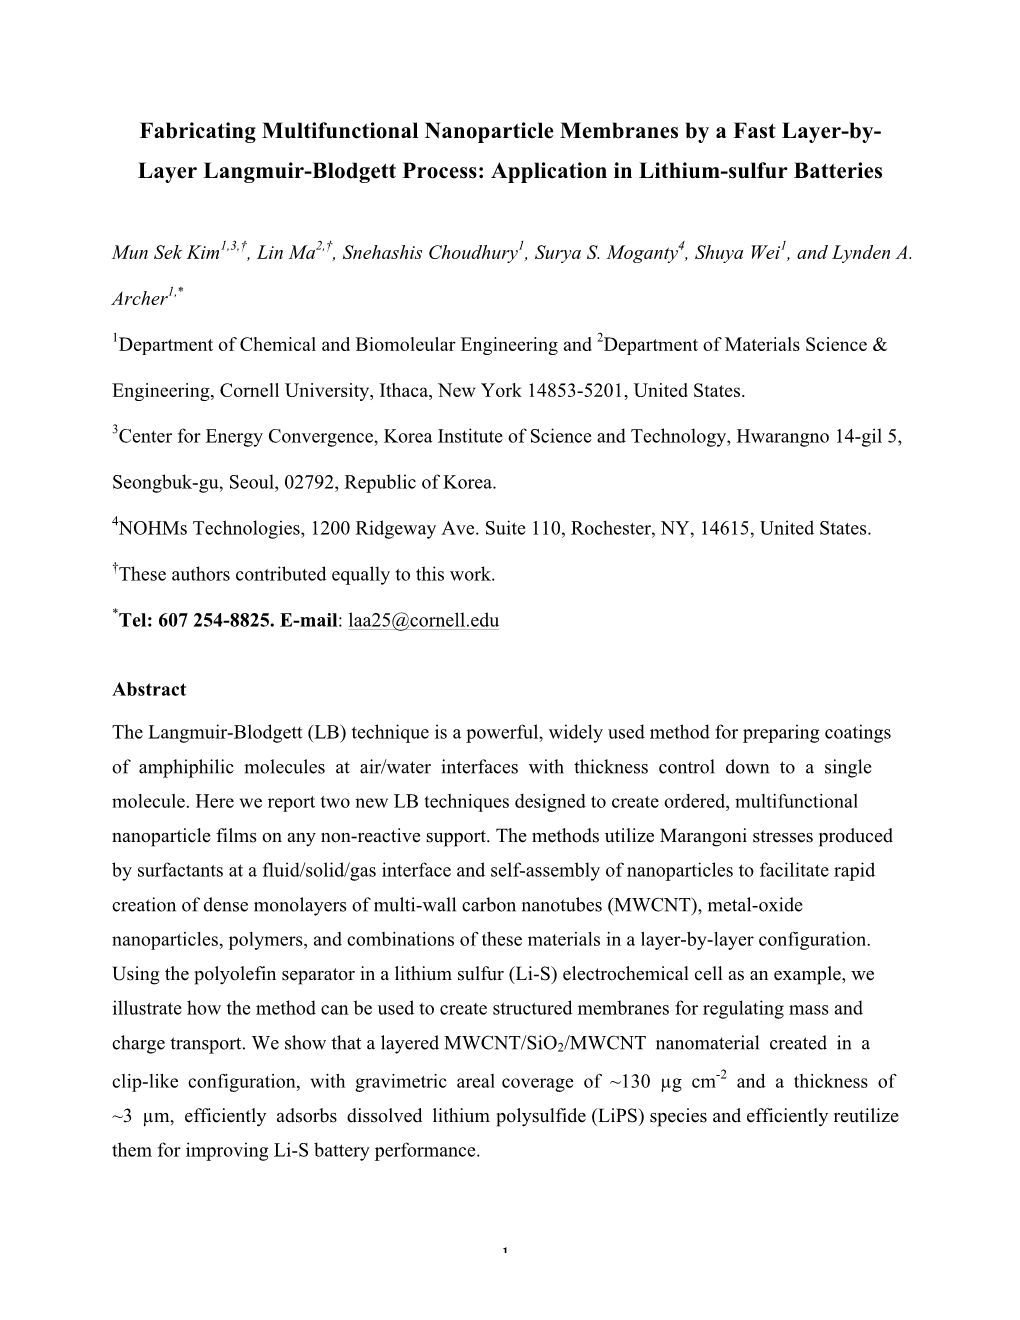 Layer Langmuir-Blodgett Process: Application in Lithium-Sulfur Batteries